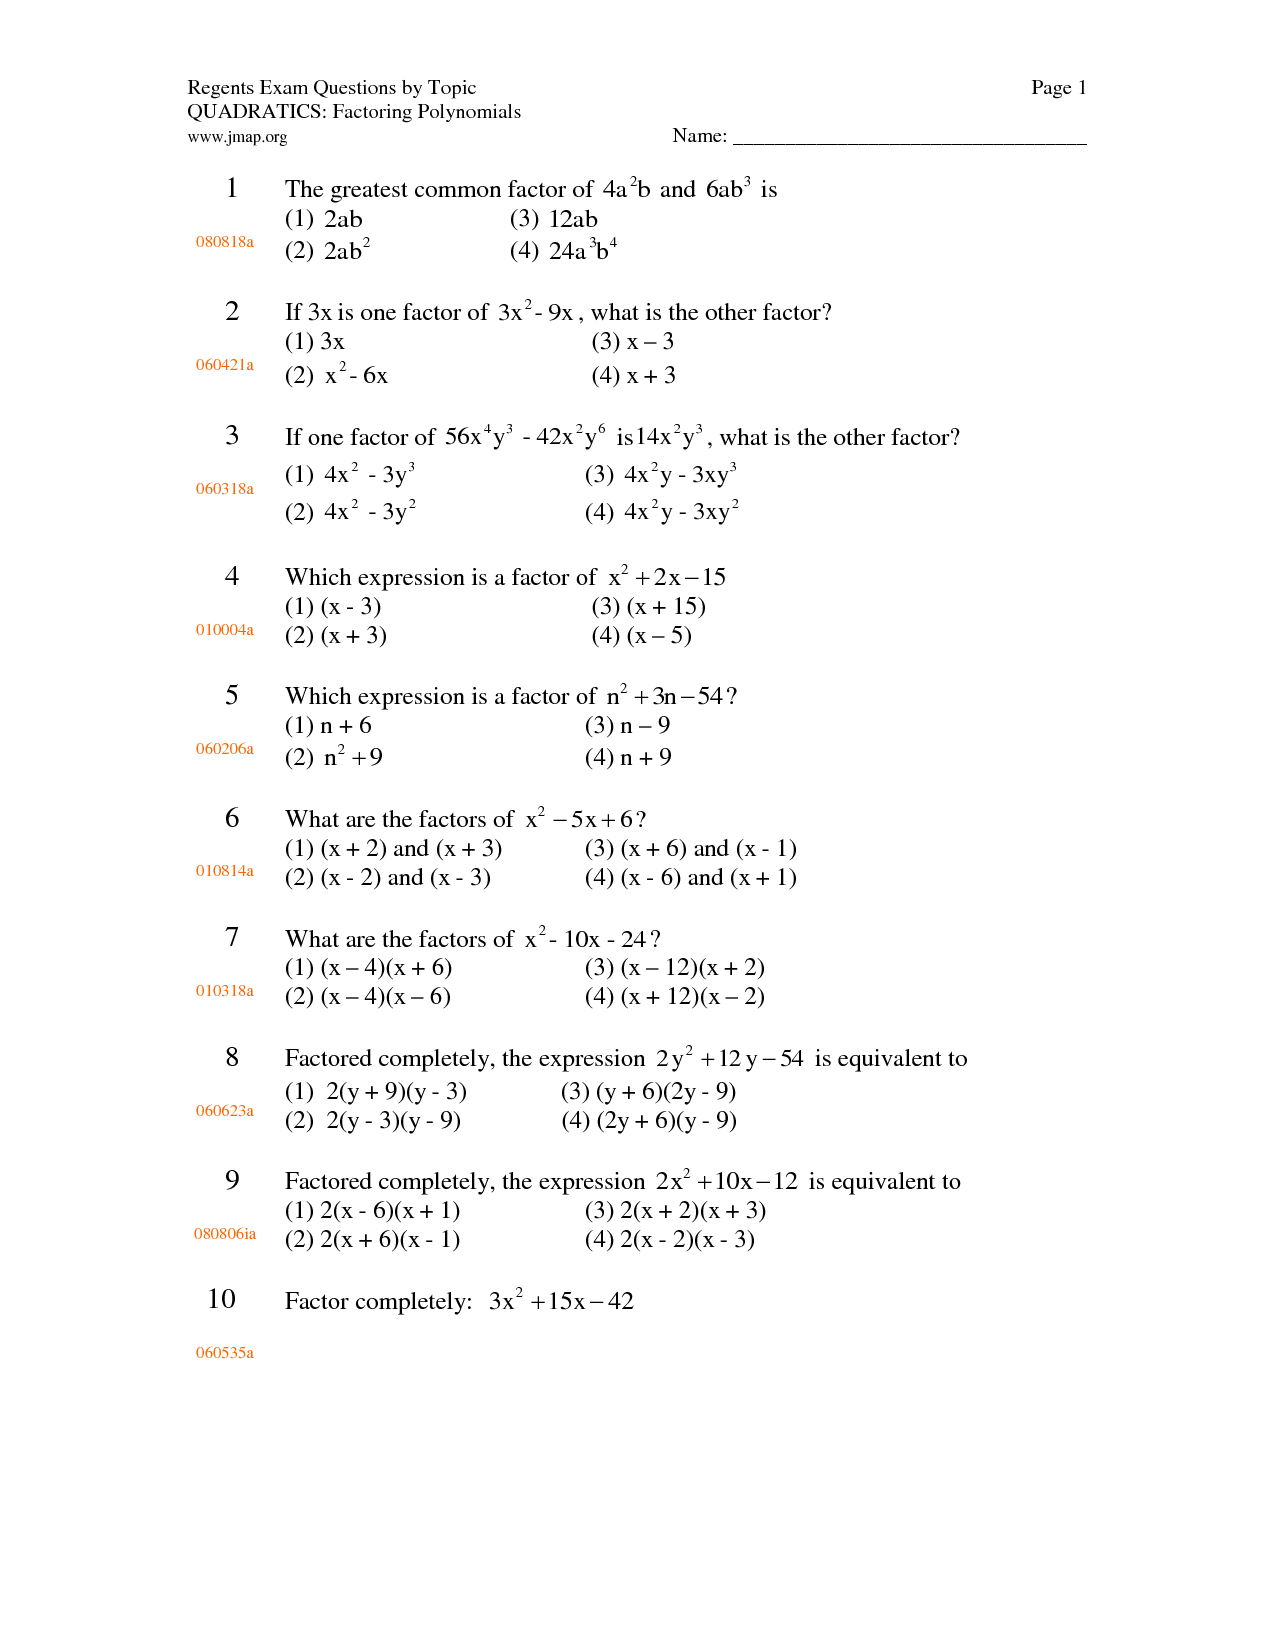 Factoring Polynomials Gcf Worksheet - Promotiontablecovers Pertaining To Factoring Polynomials Gcf Worksheet